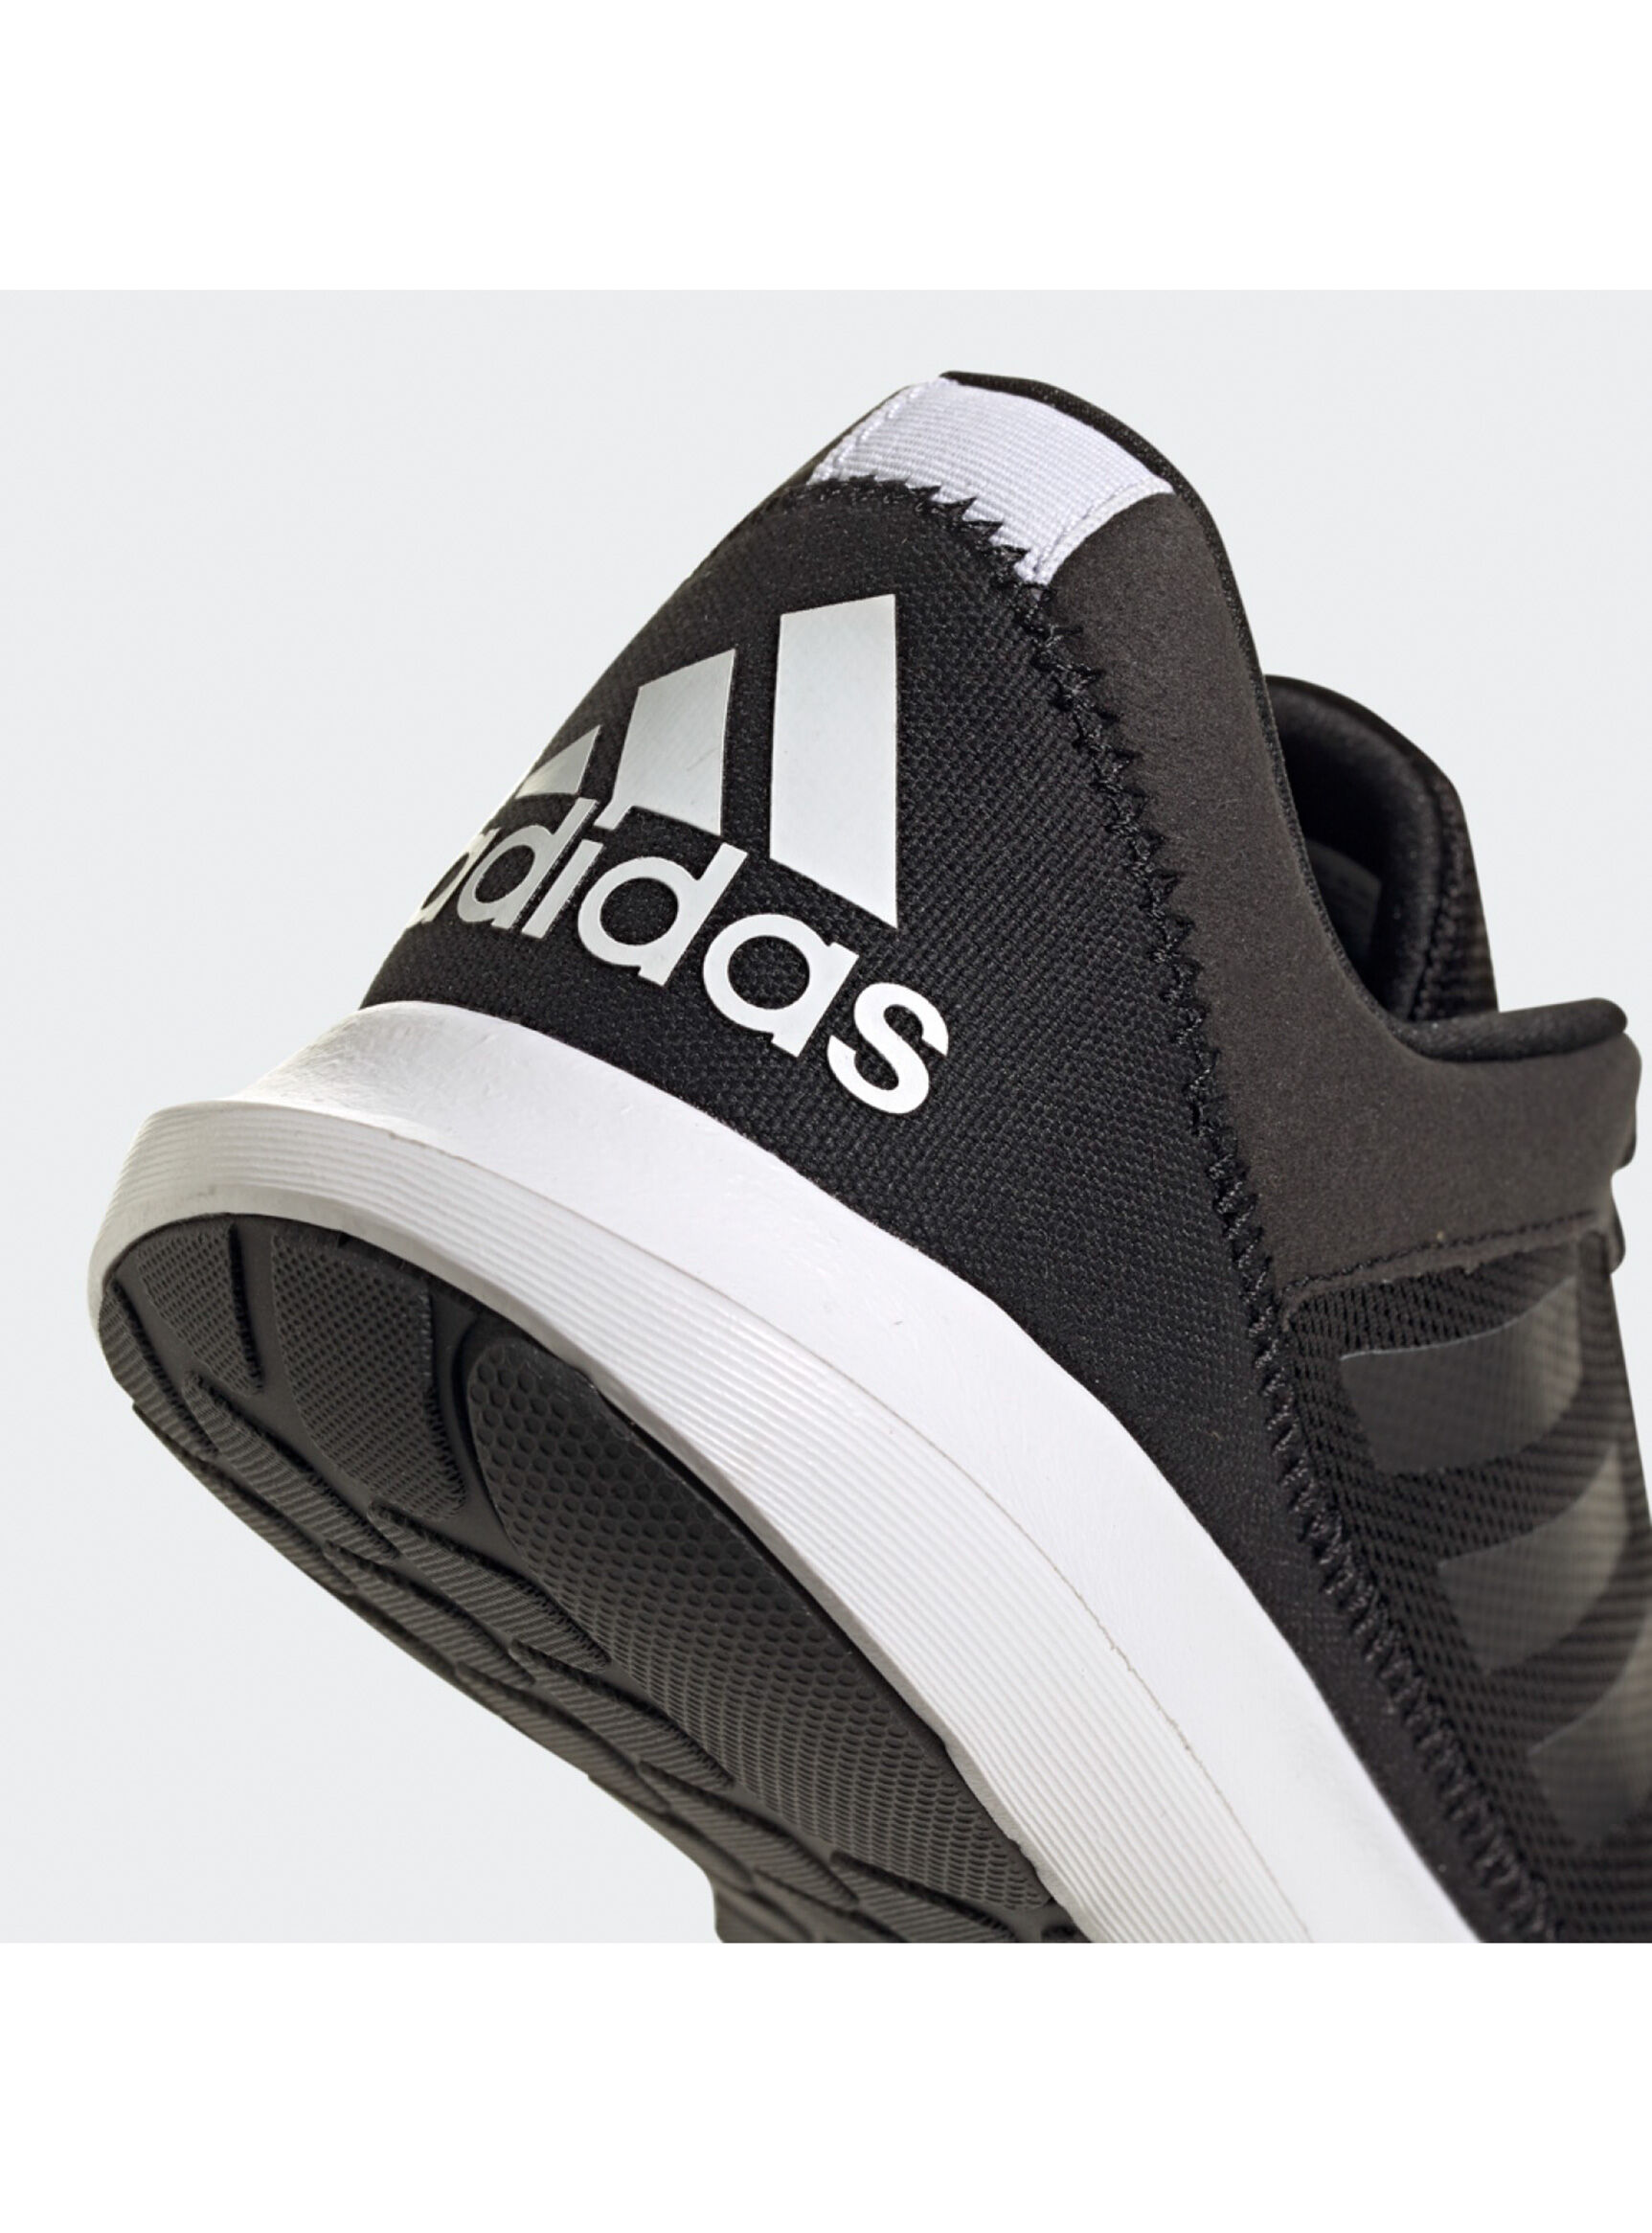 Кроссовки adidas core. Кроссовки adidas CORERACER. Кроссовки adidas CORERACER fx3603. Adidas CORERACER черные. Adidas fx3594.